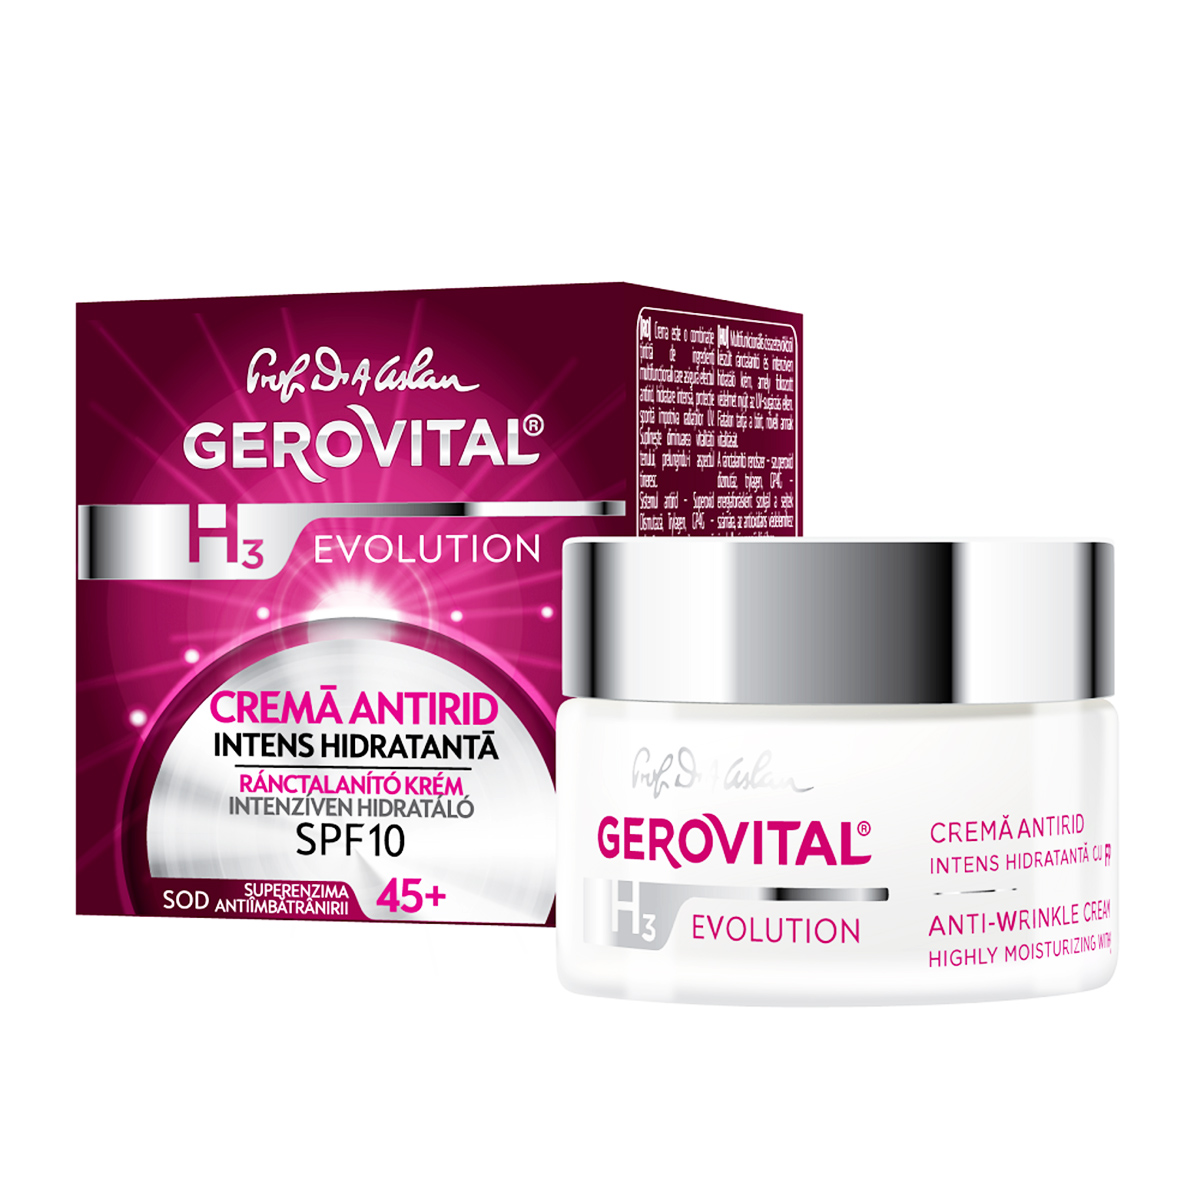 Crema Antirid Intens Hidratanta SPF 10 Gerovital H3 Evolution, 50 ml